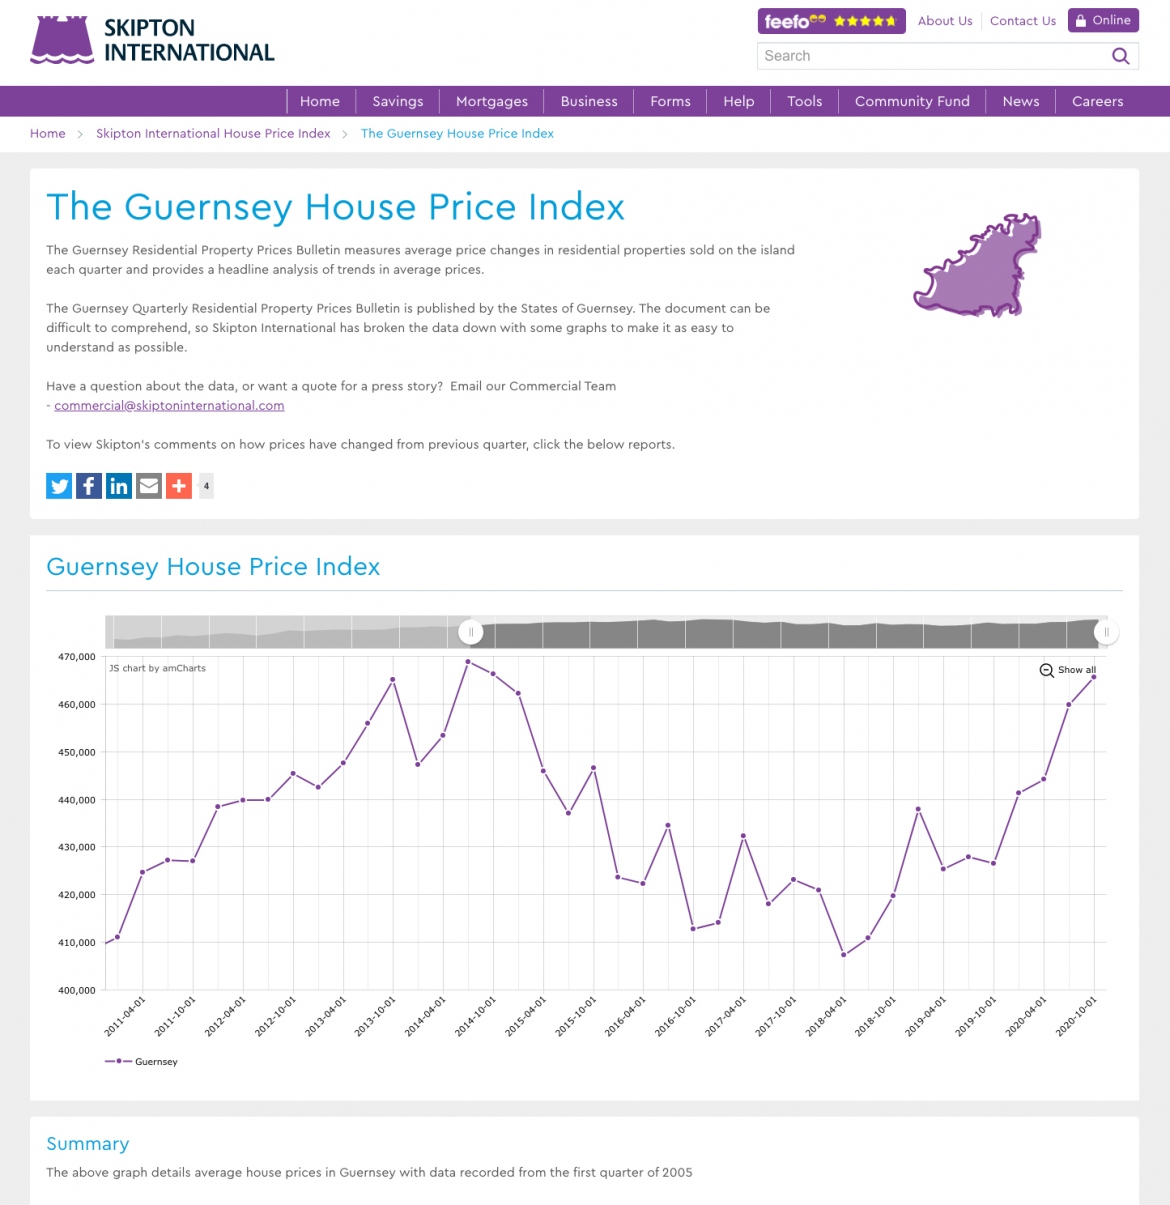 Skipton International website screenshot of the Guernsey House Price Index